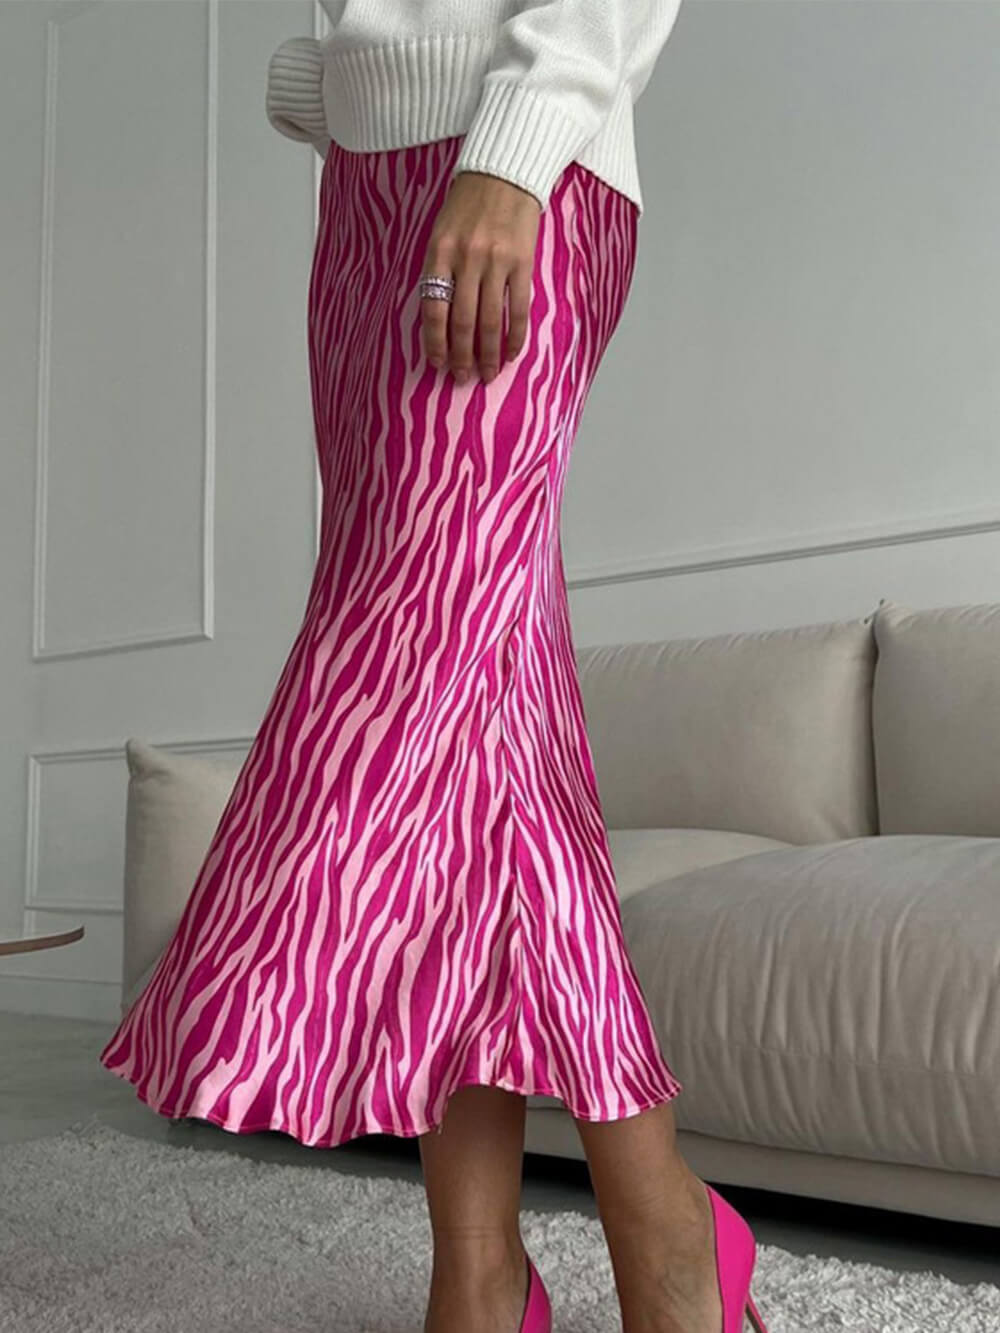 Modna spódnica typu fishtail z francuskim nadrukiem